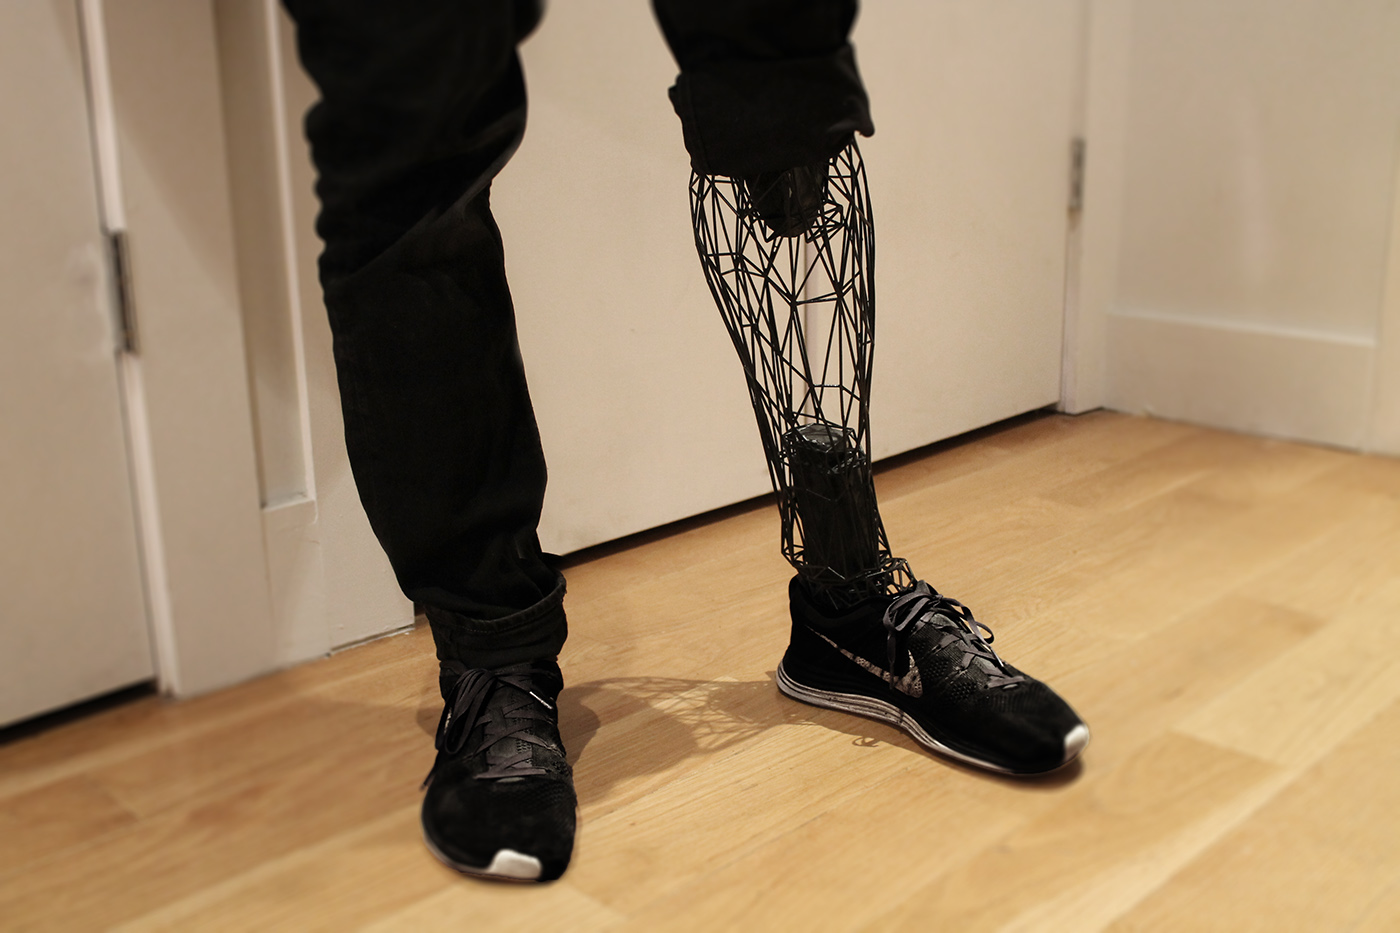 Exo Prosthetic Leg